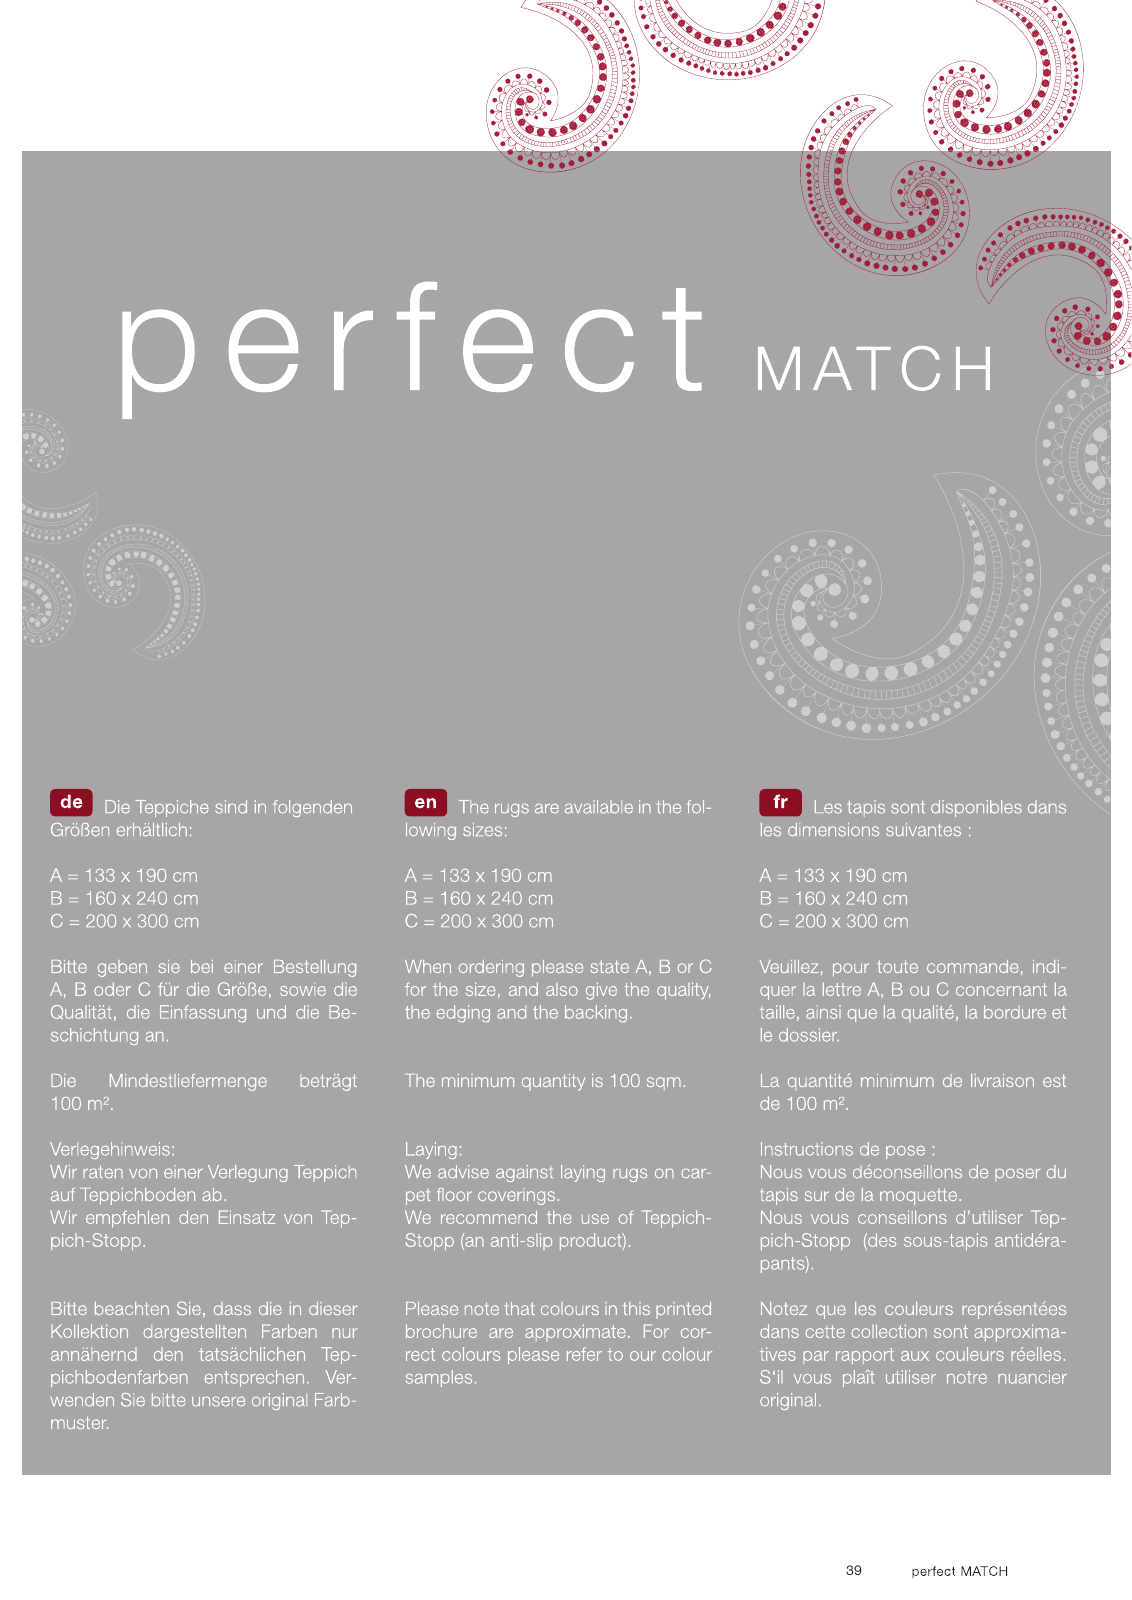 Vorschau Rug Guide perfect match Seite 39